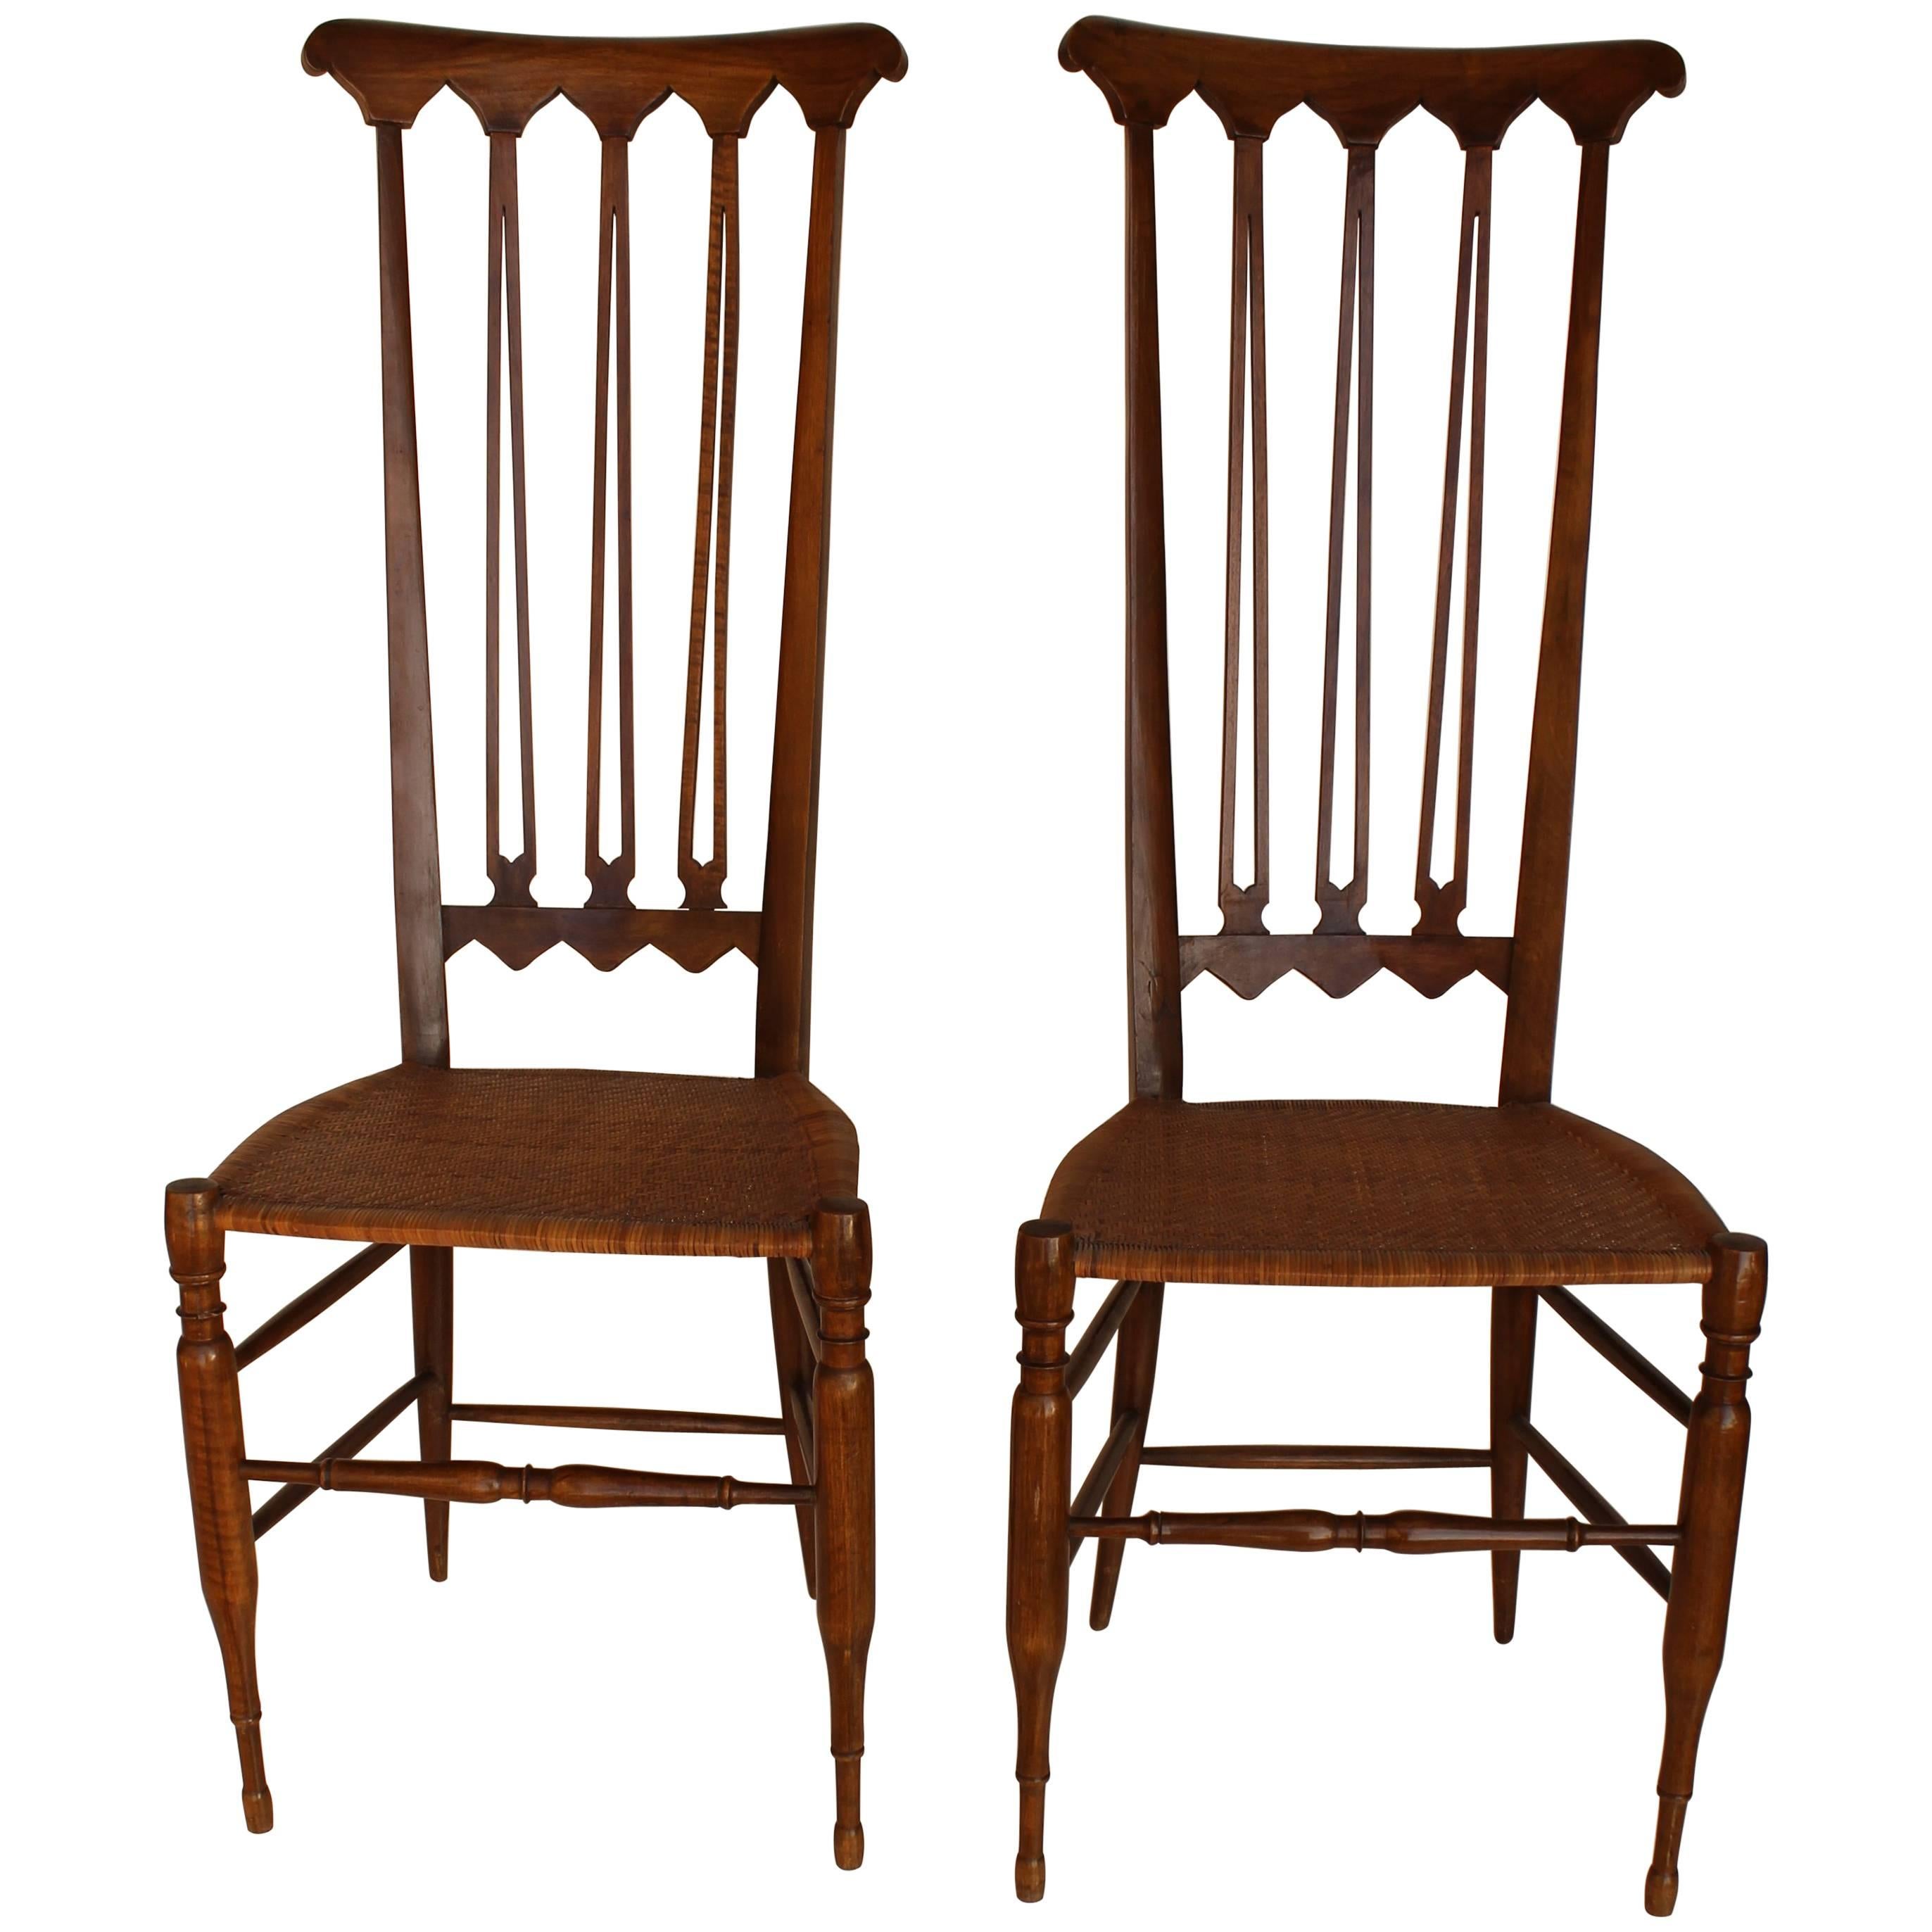 Two Walnut Wood Chiavari Chairs